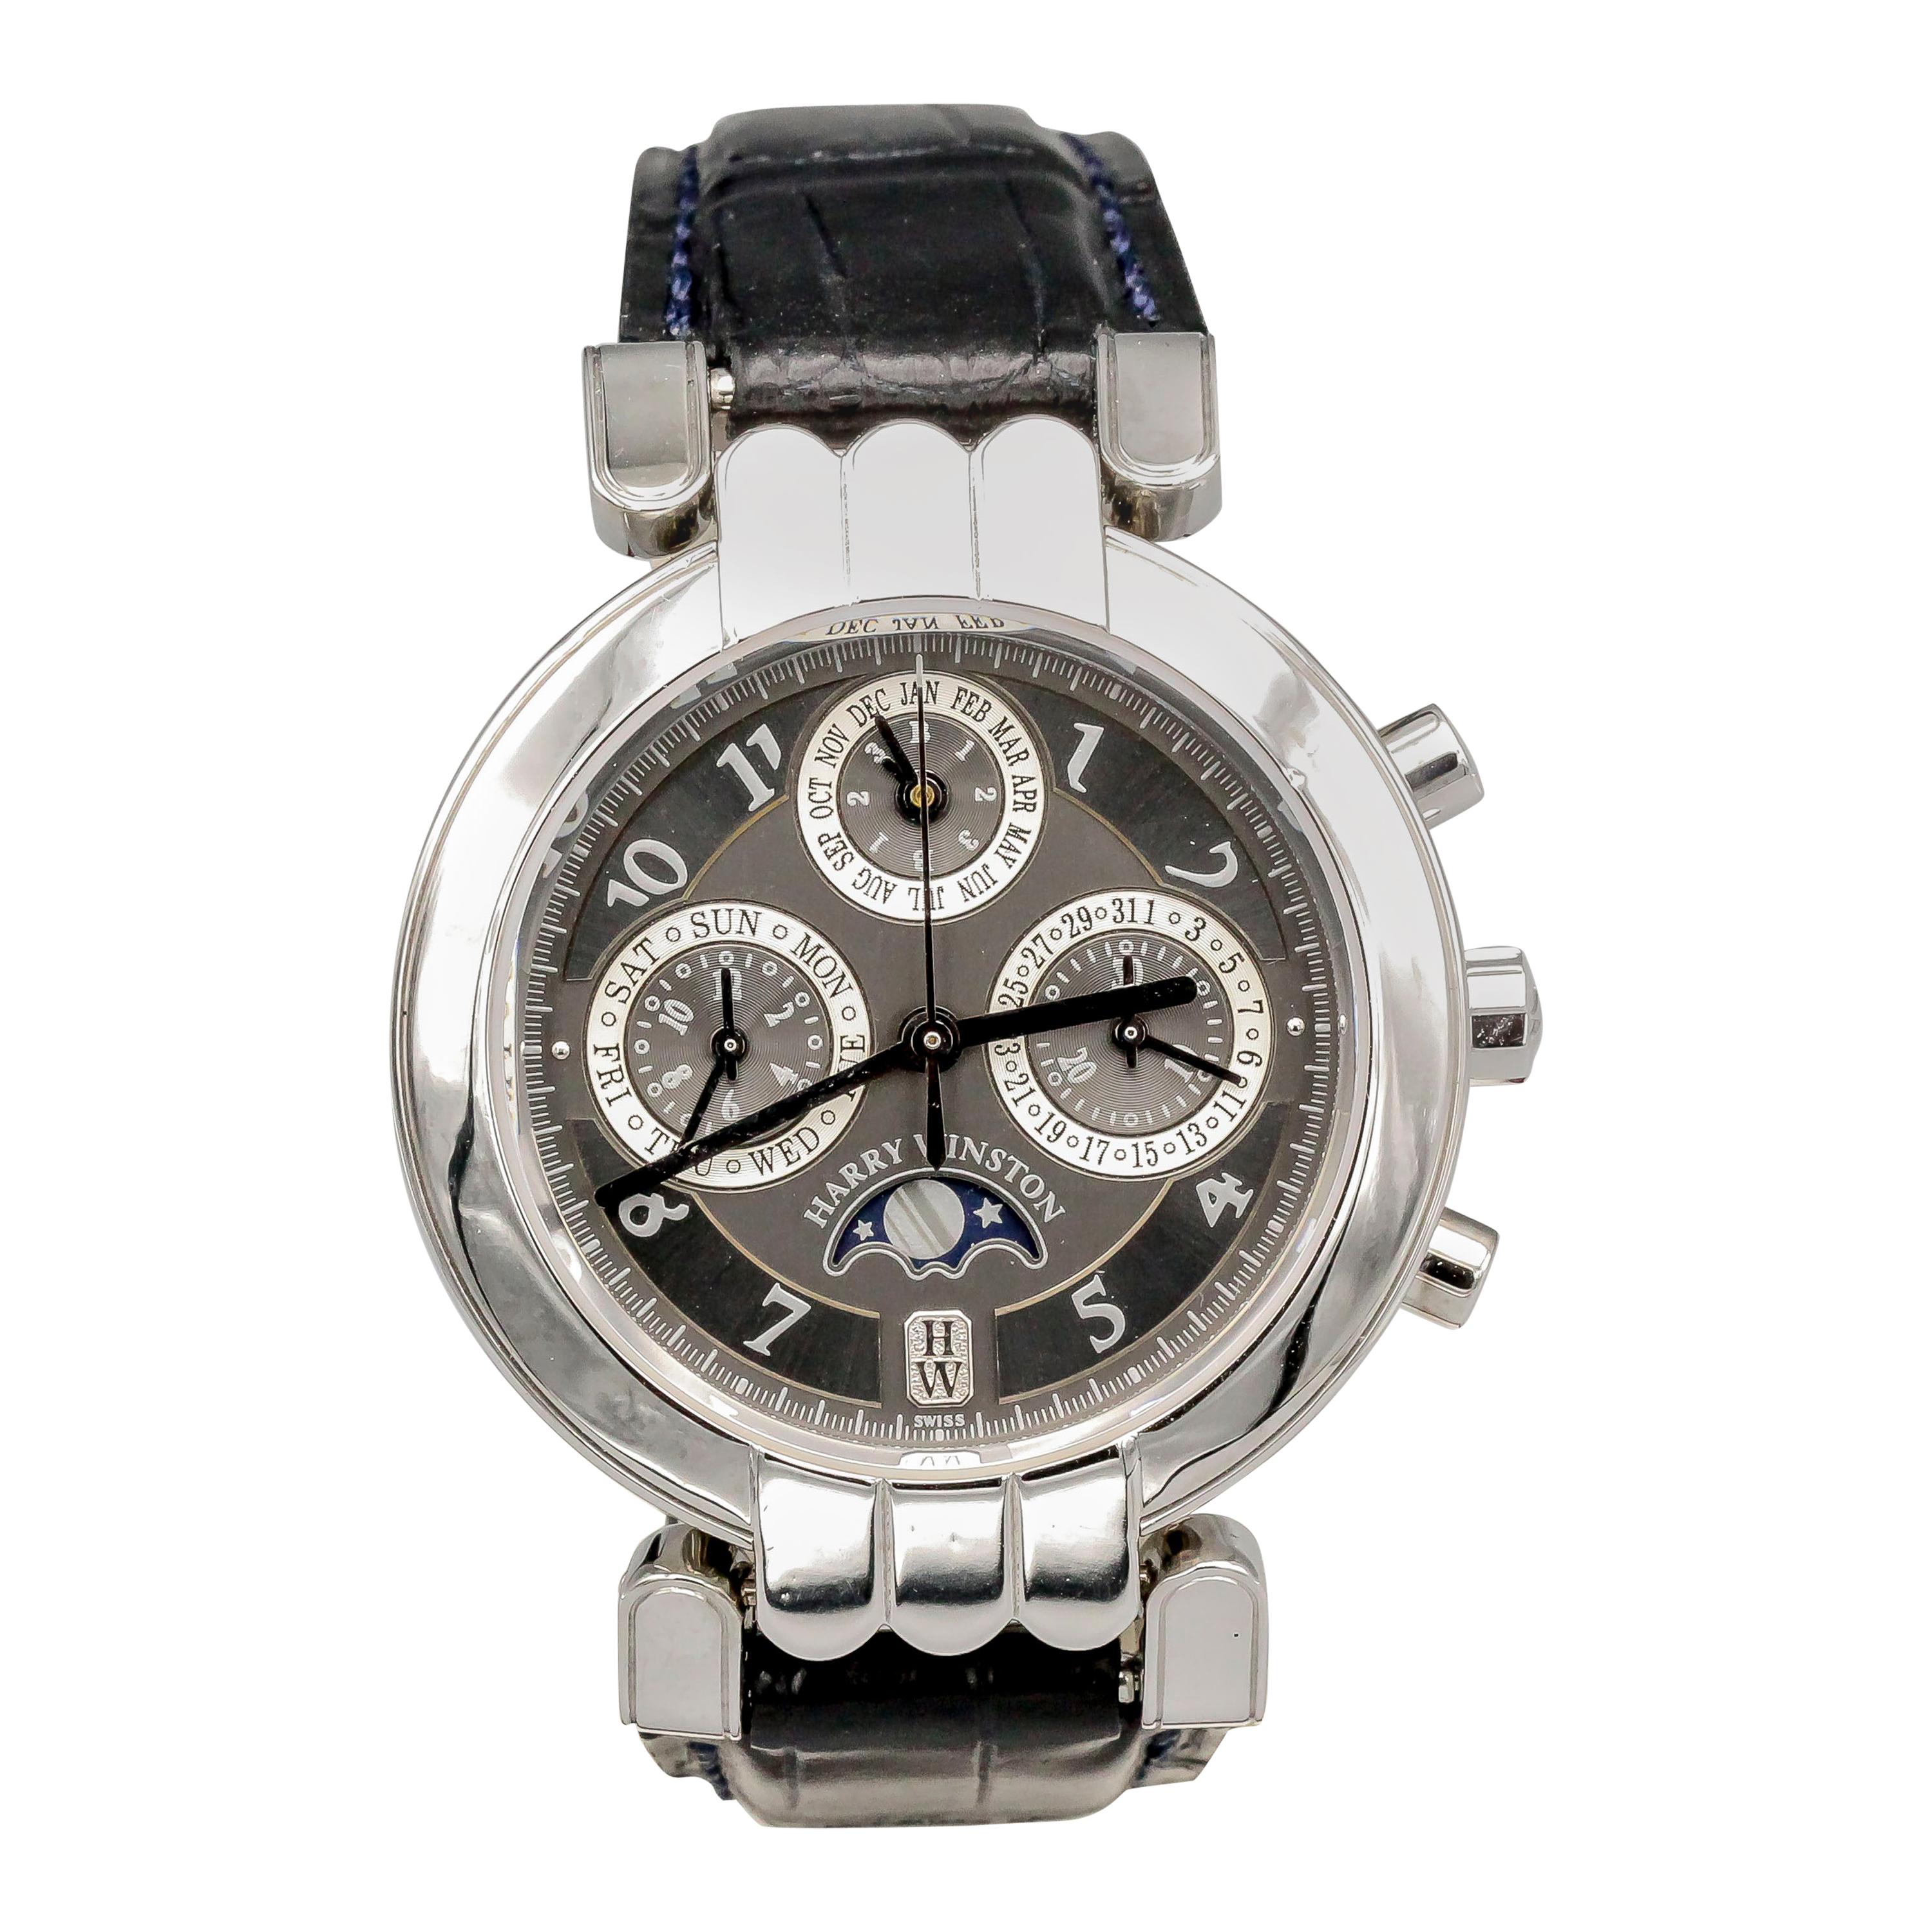 Harry Winston Premier Platinum Limited Ed. Perpetual Calendar Chronograph Watch